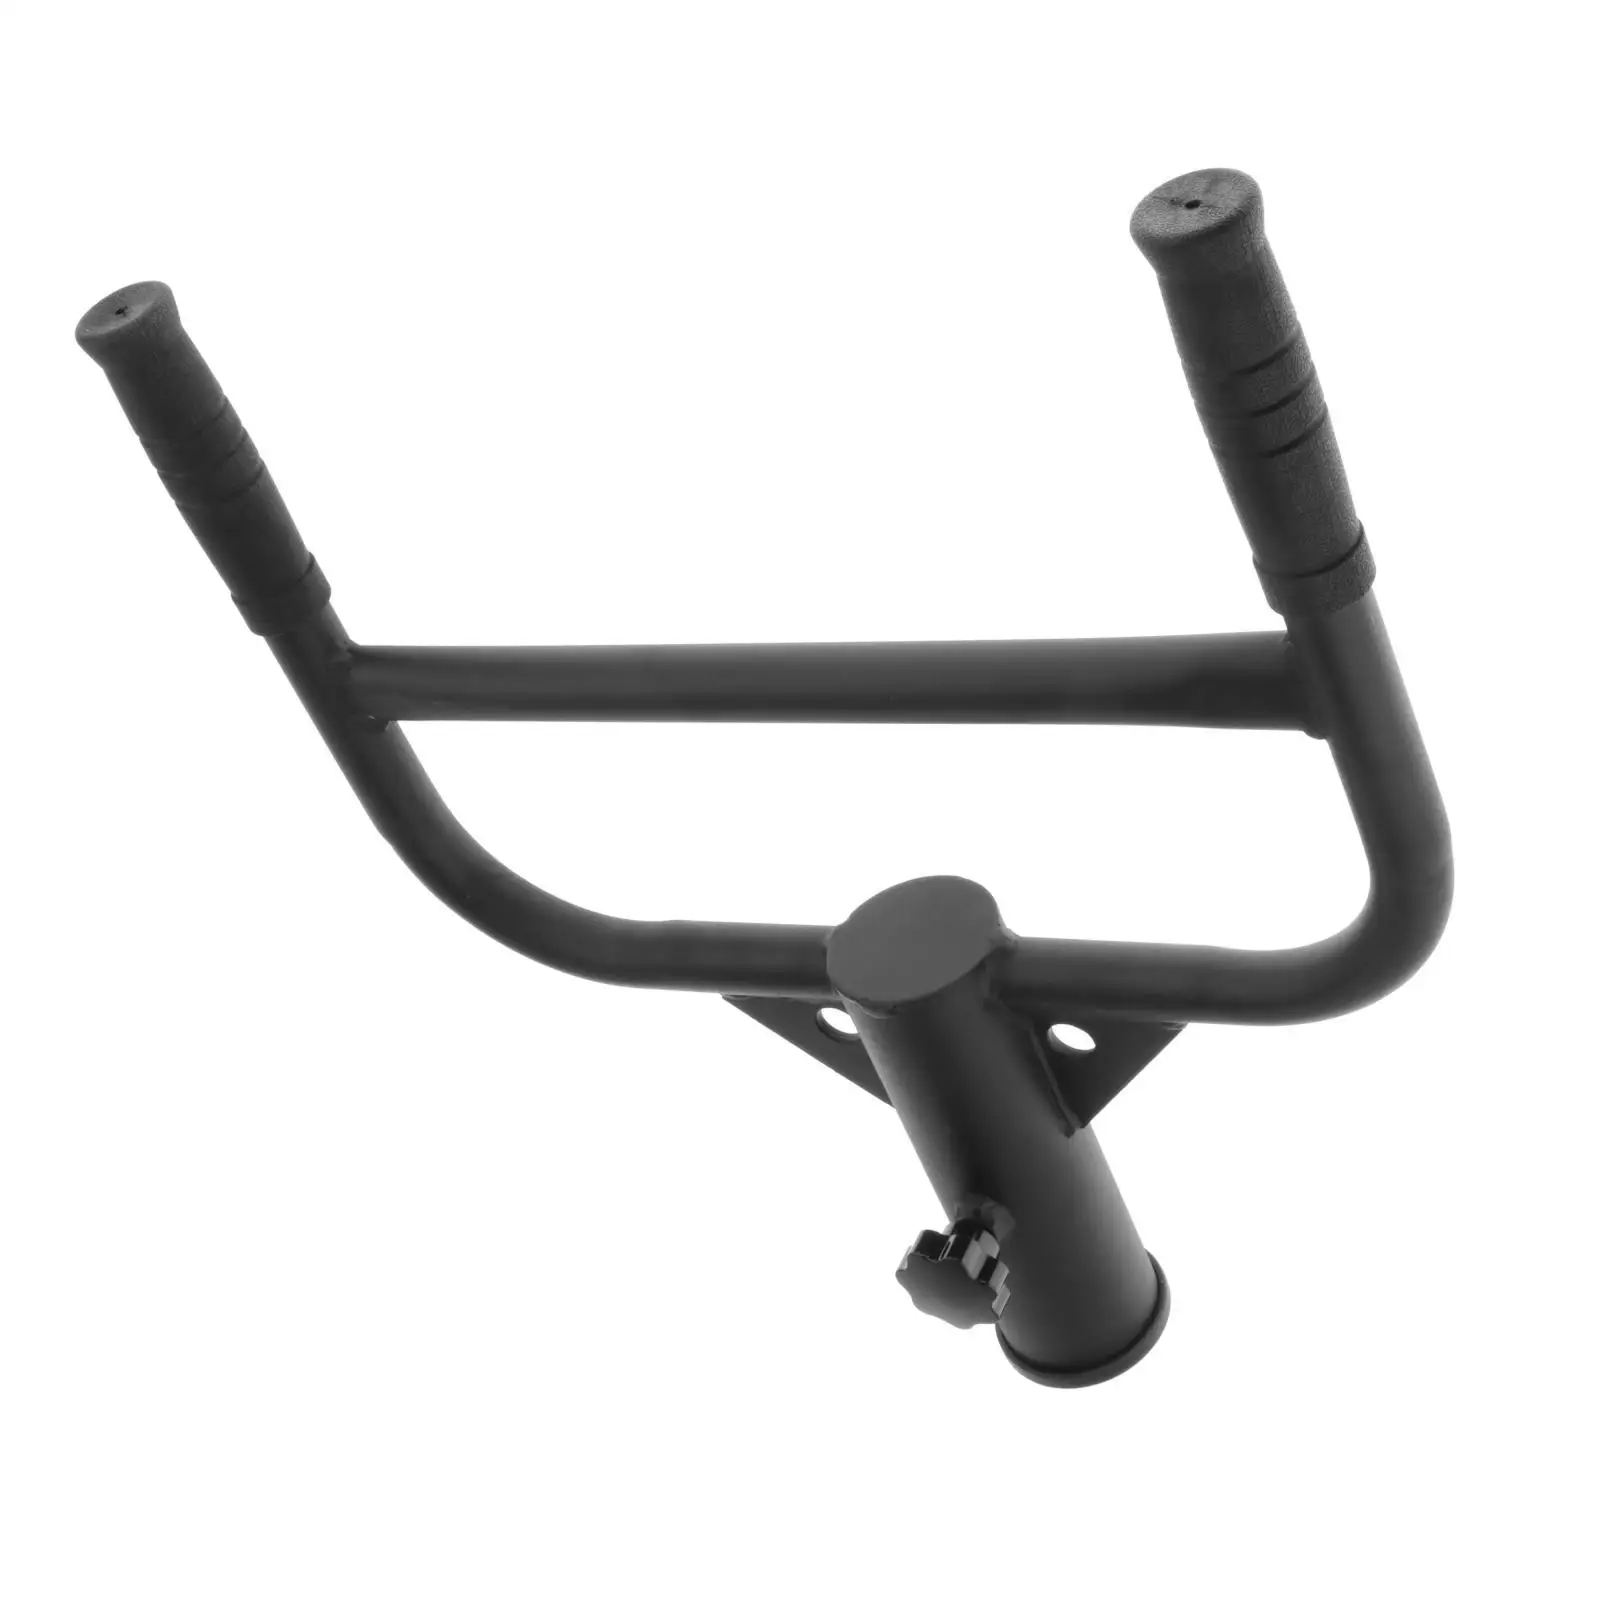 Weightlifting Squat Workout Handle for 2 inch Barbell Rod Lightweight Dual Handles Shoulder Press Bar for T Bar Row Platform Gym